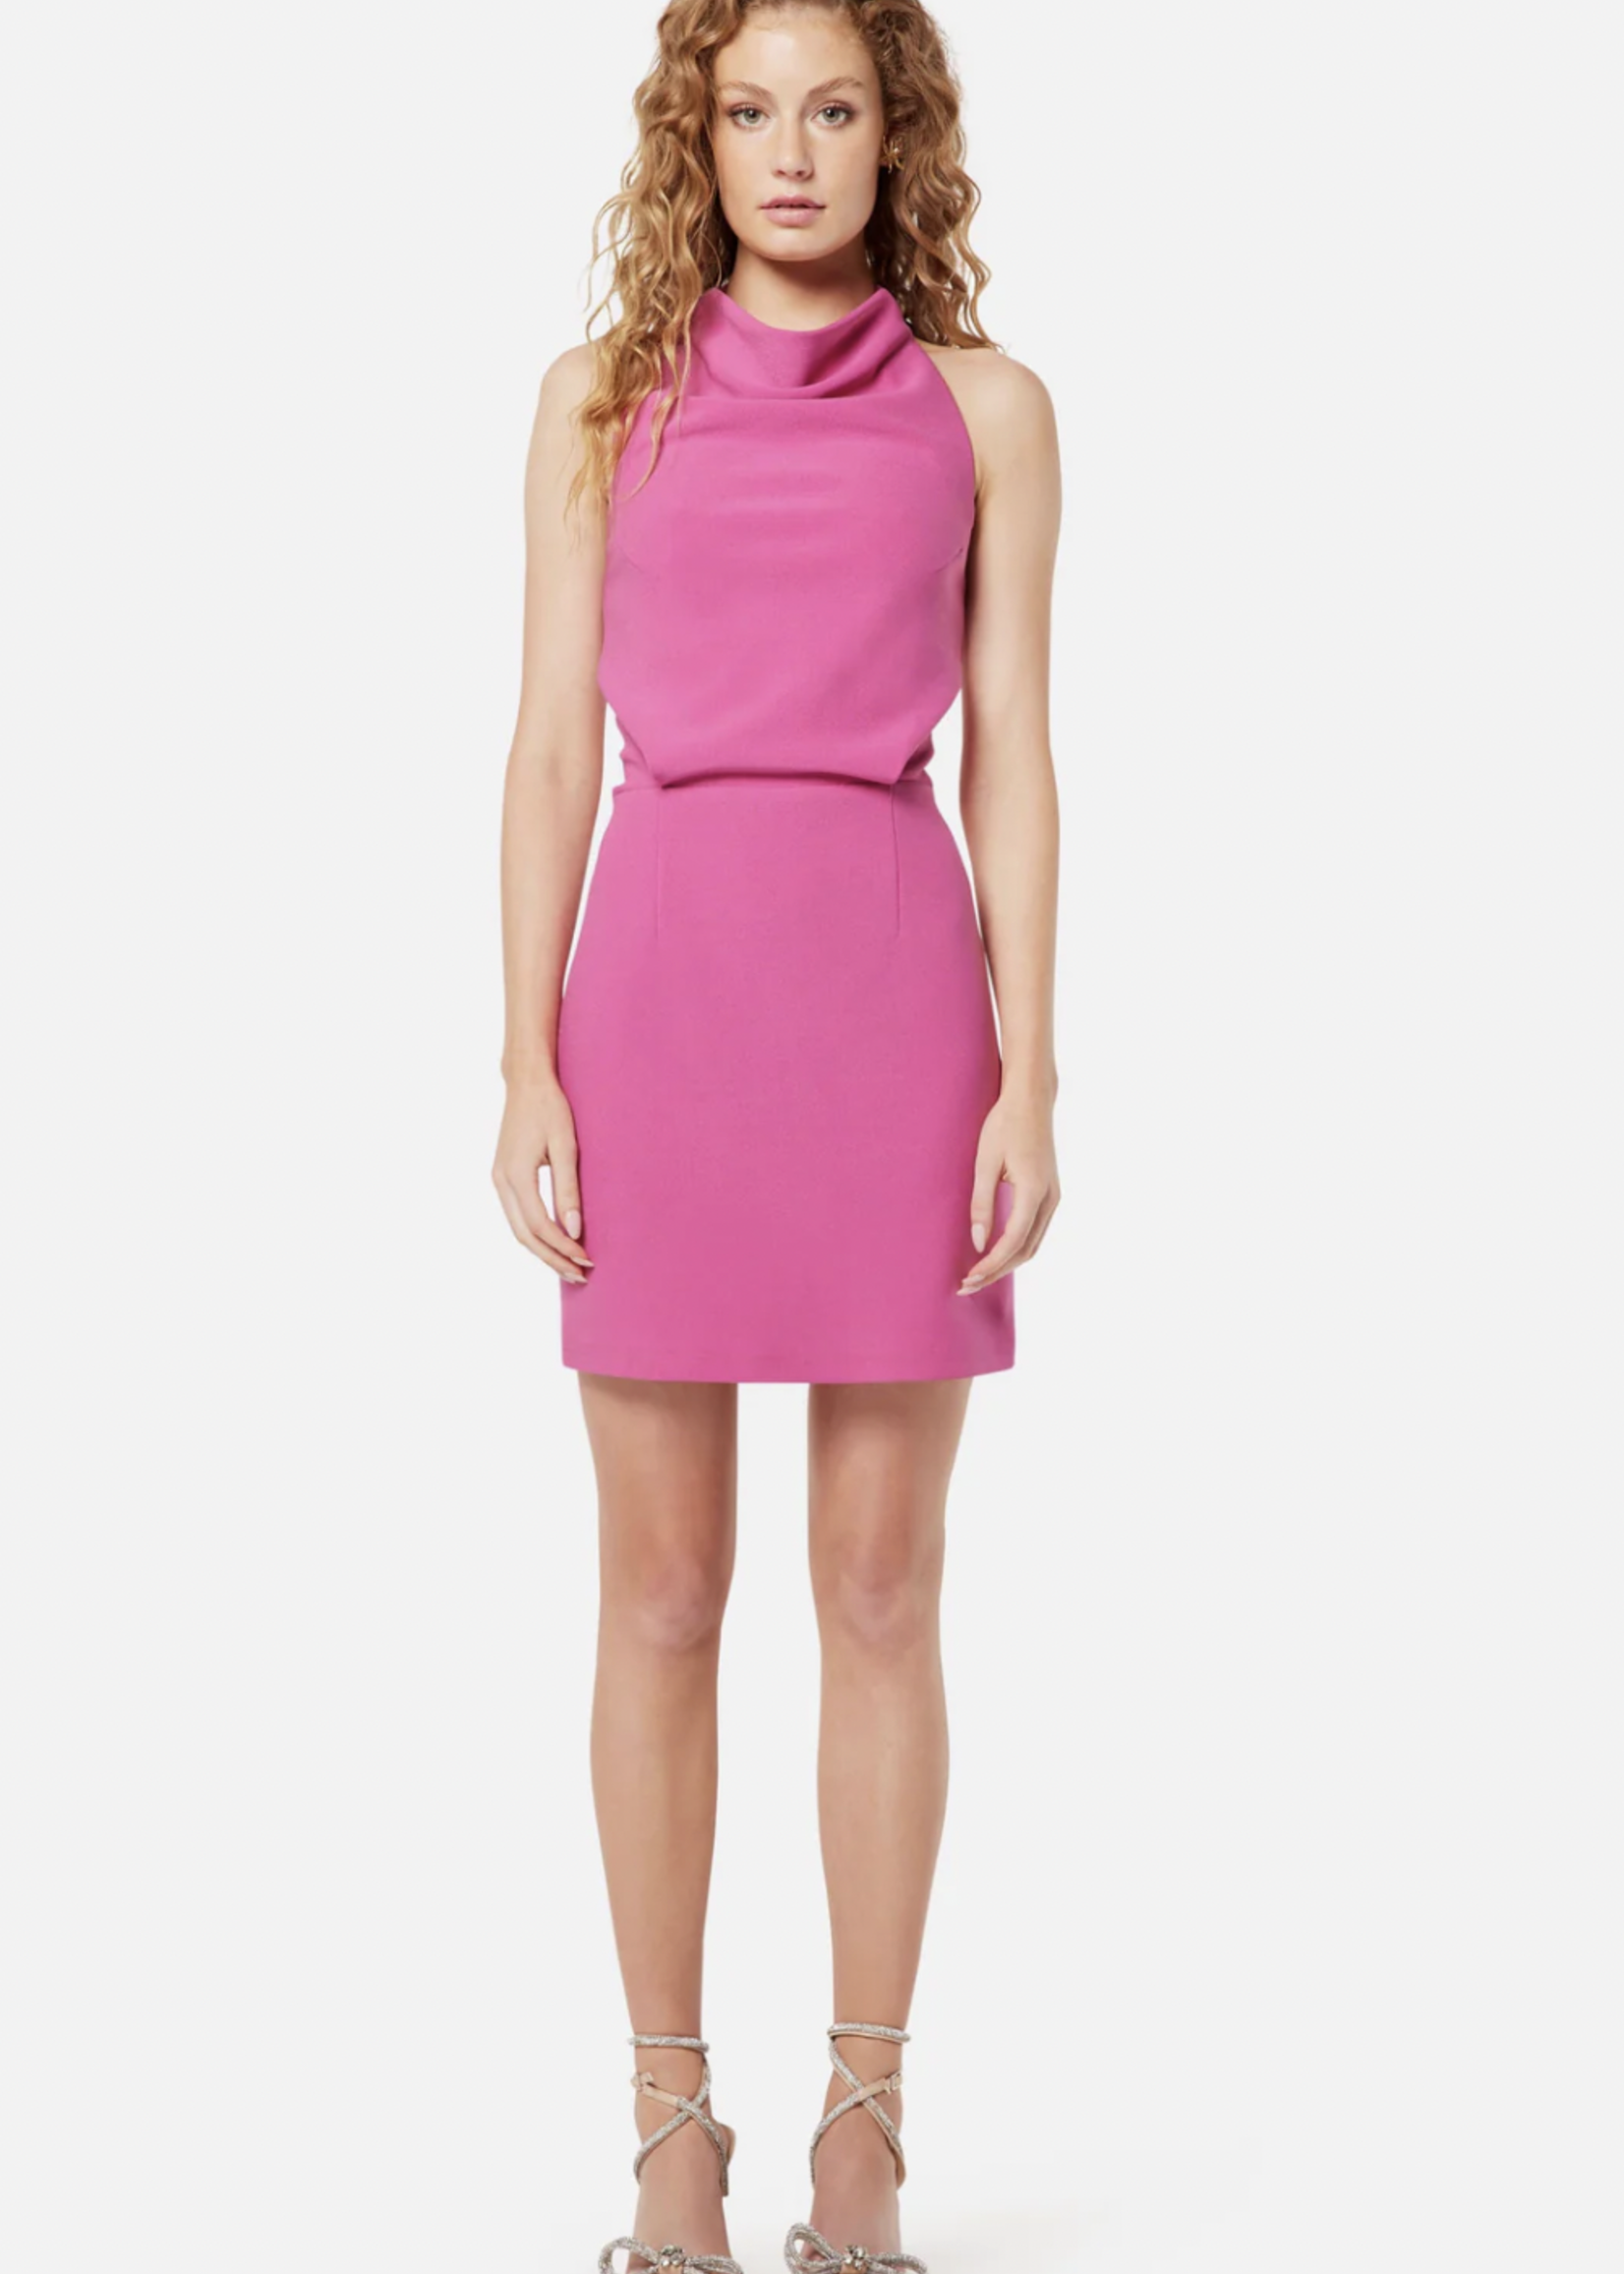 Elitaire Boutique Philippa Hot Pink Dress